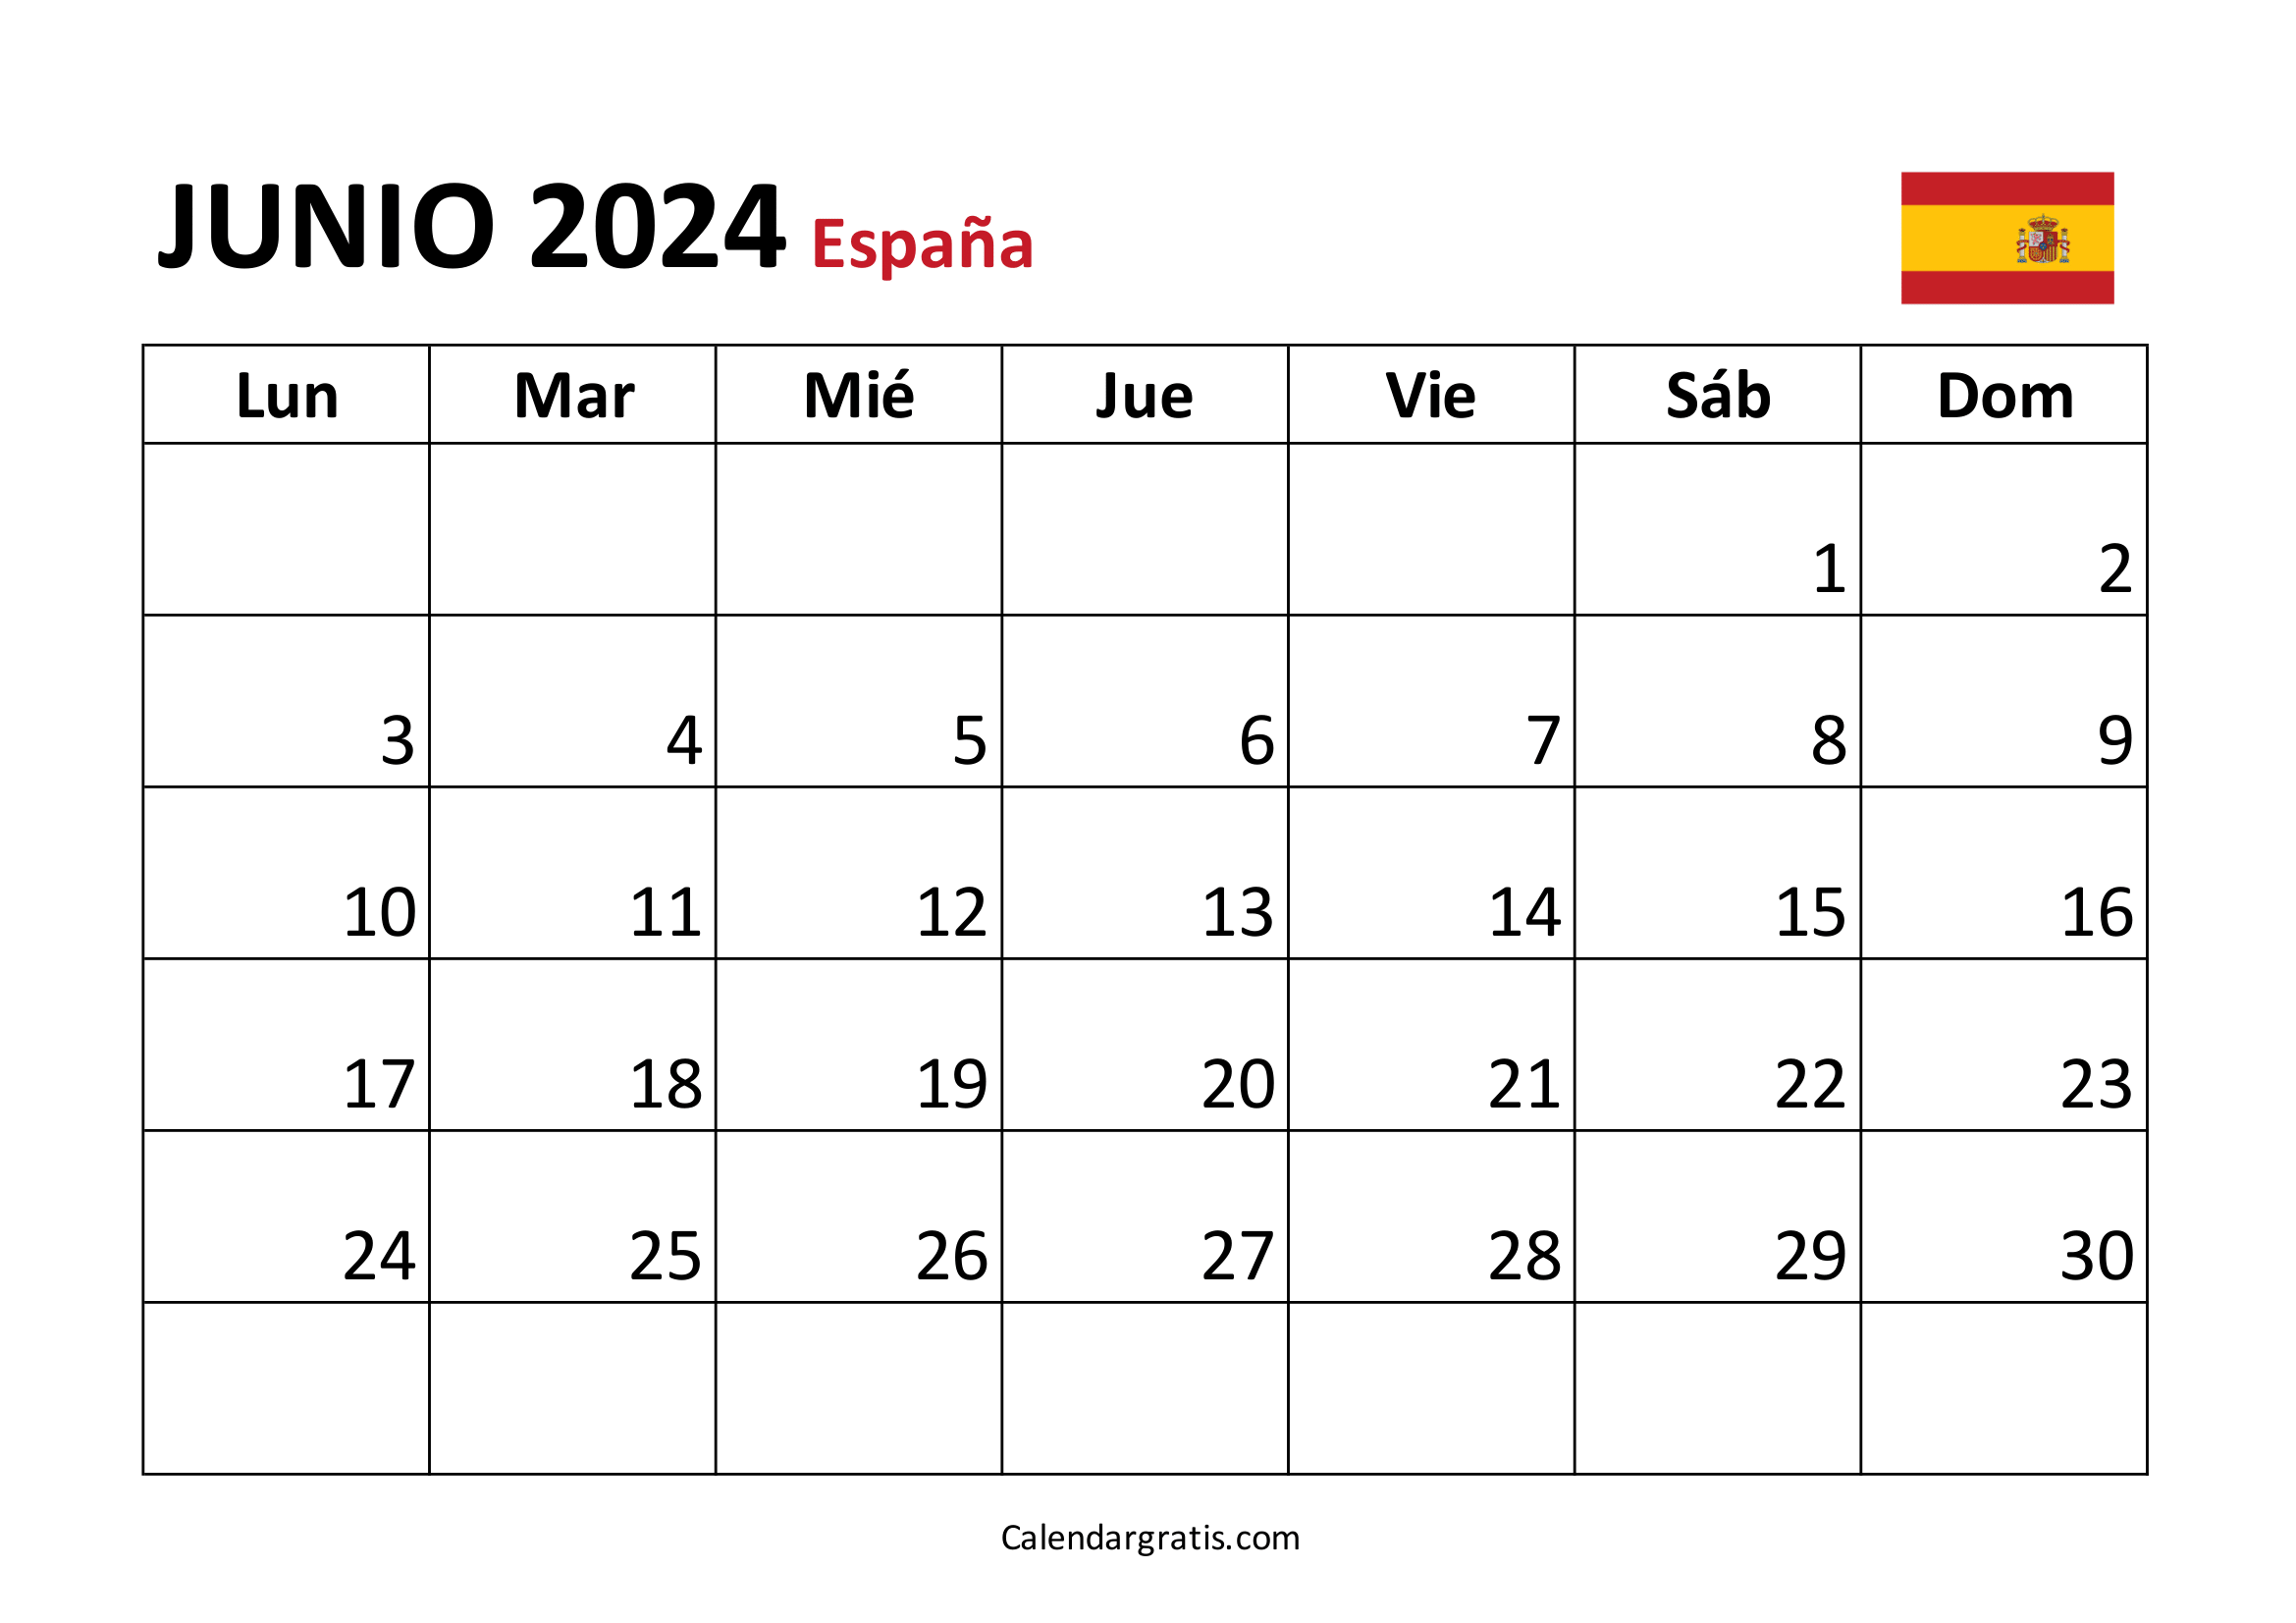 Calendario junio 2024 España